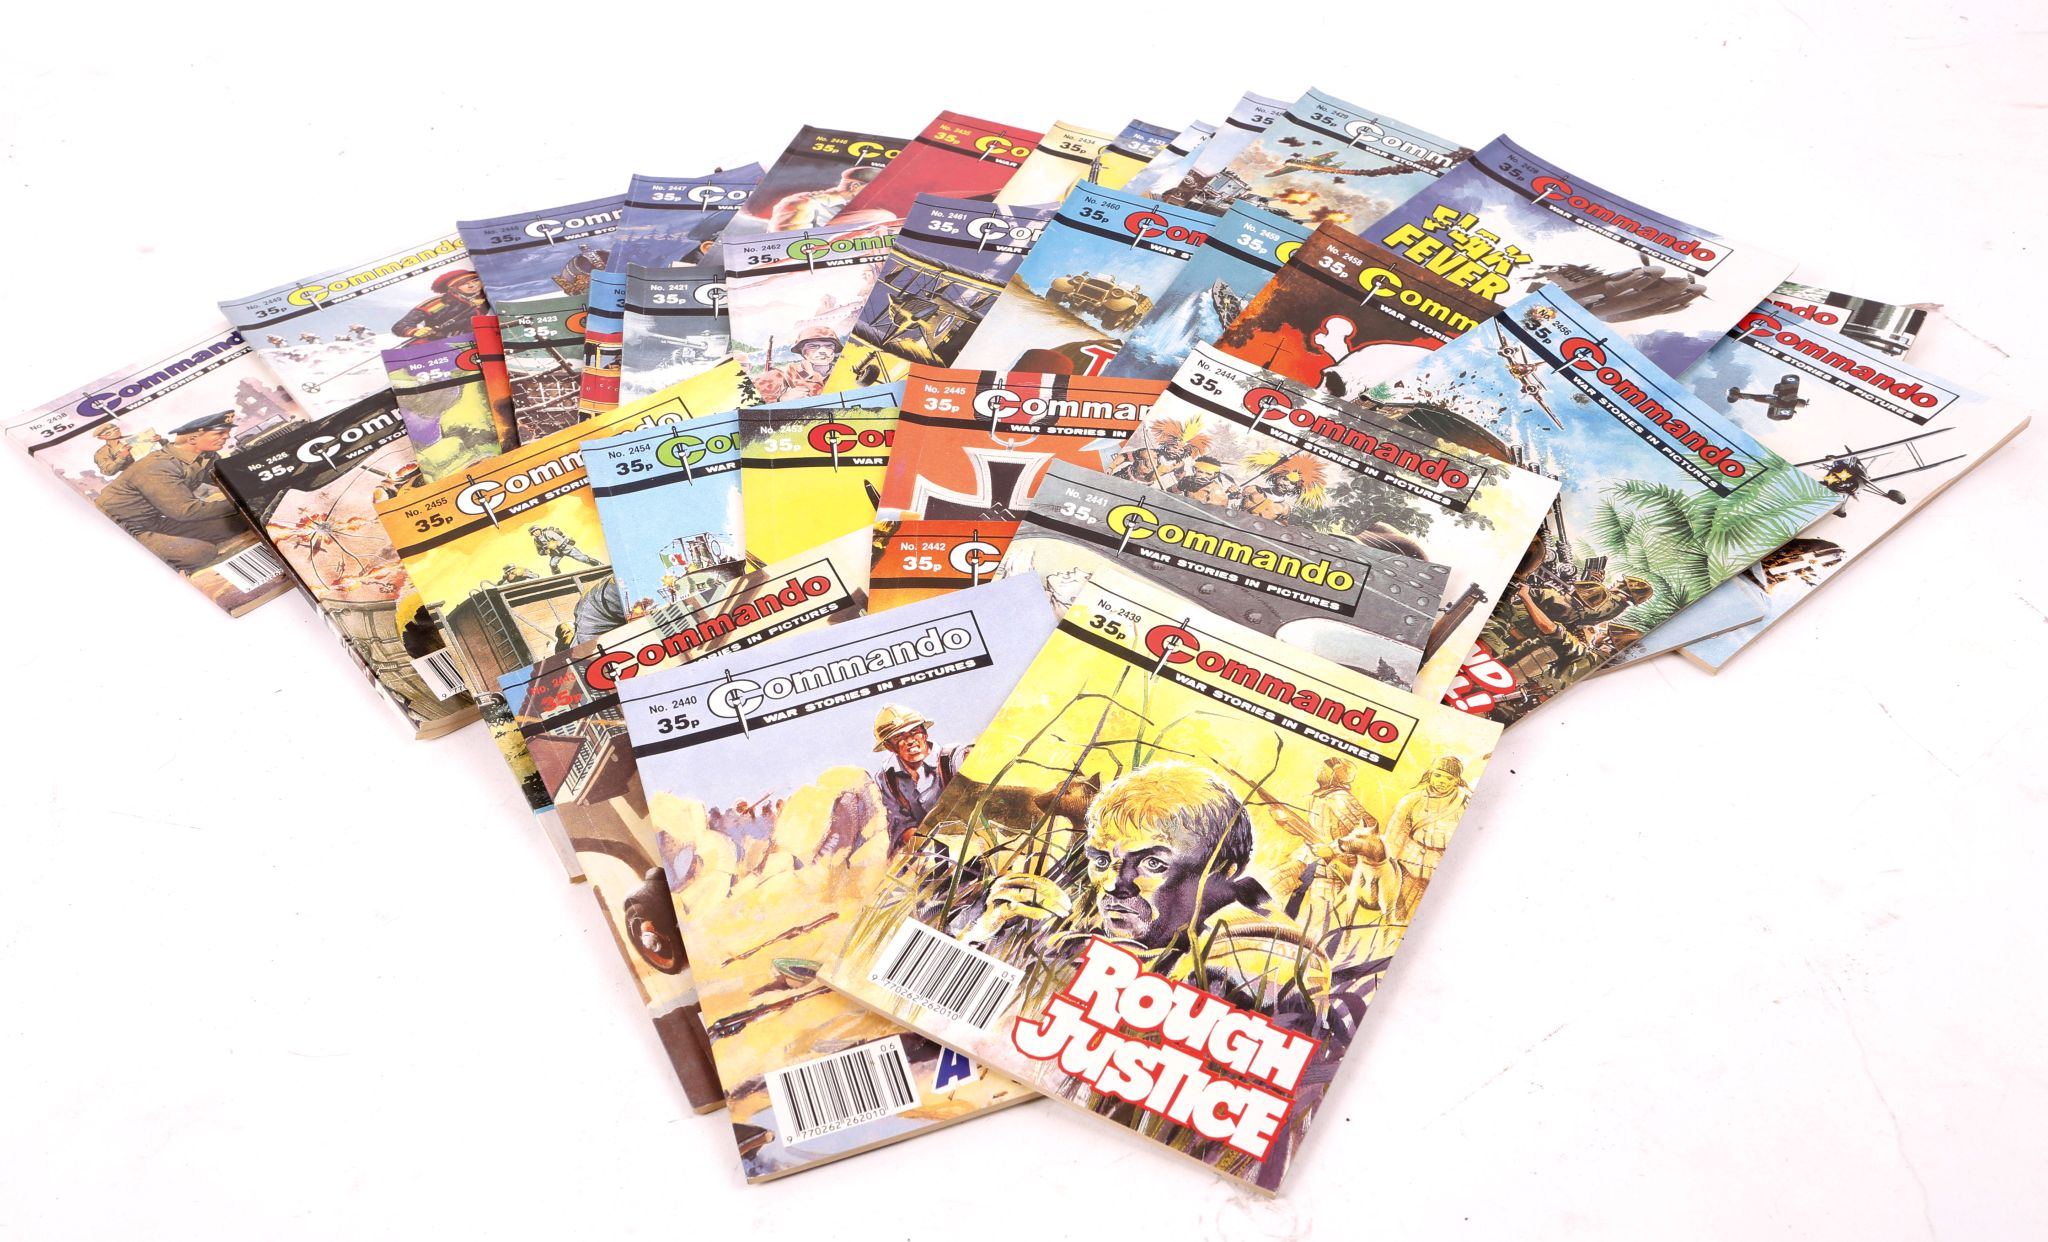 Military comics: Battle & Commando (over 500 issues).